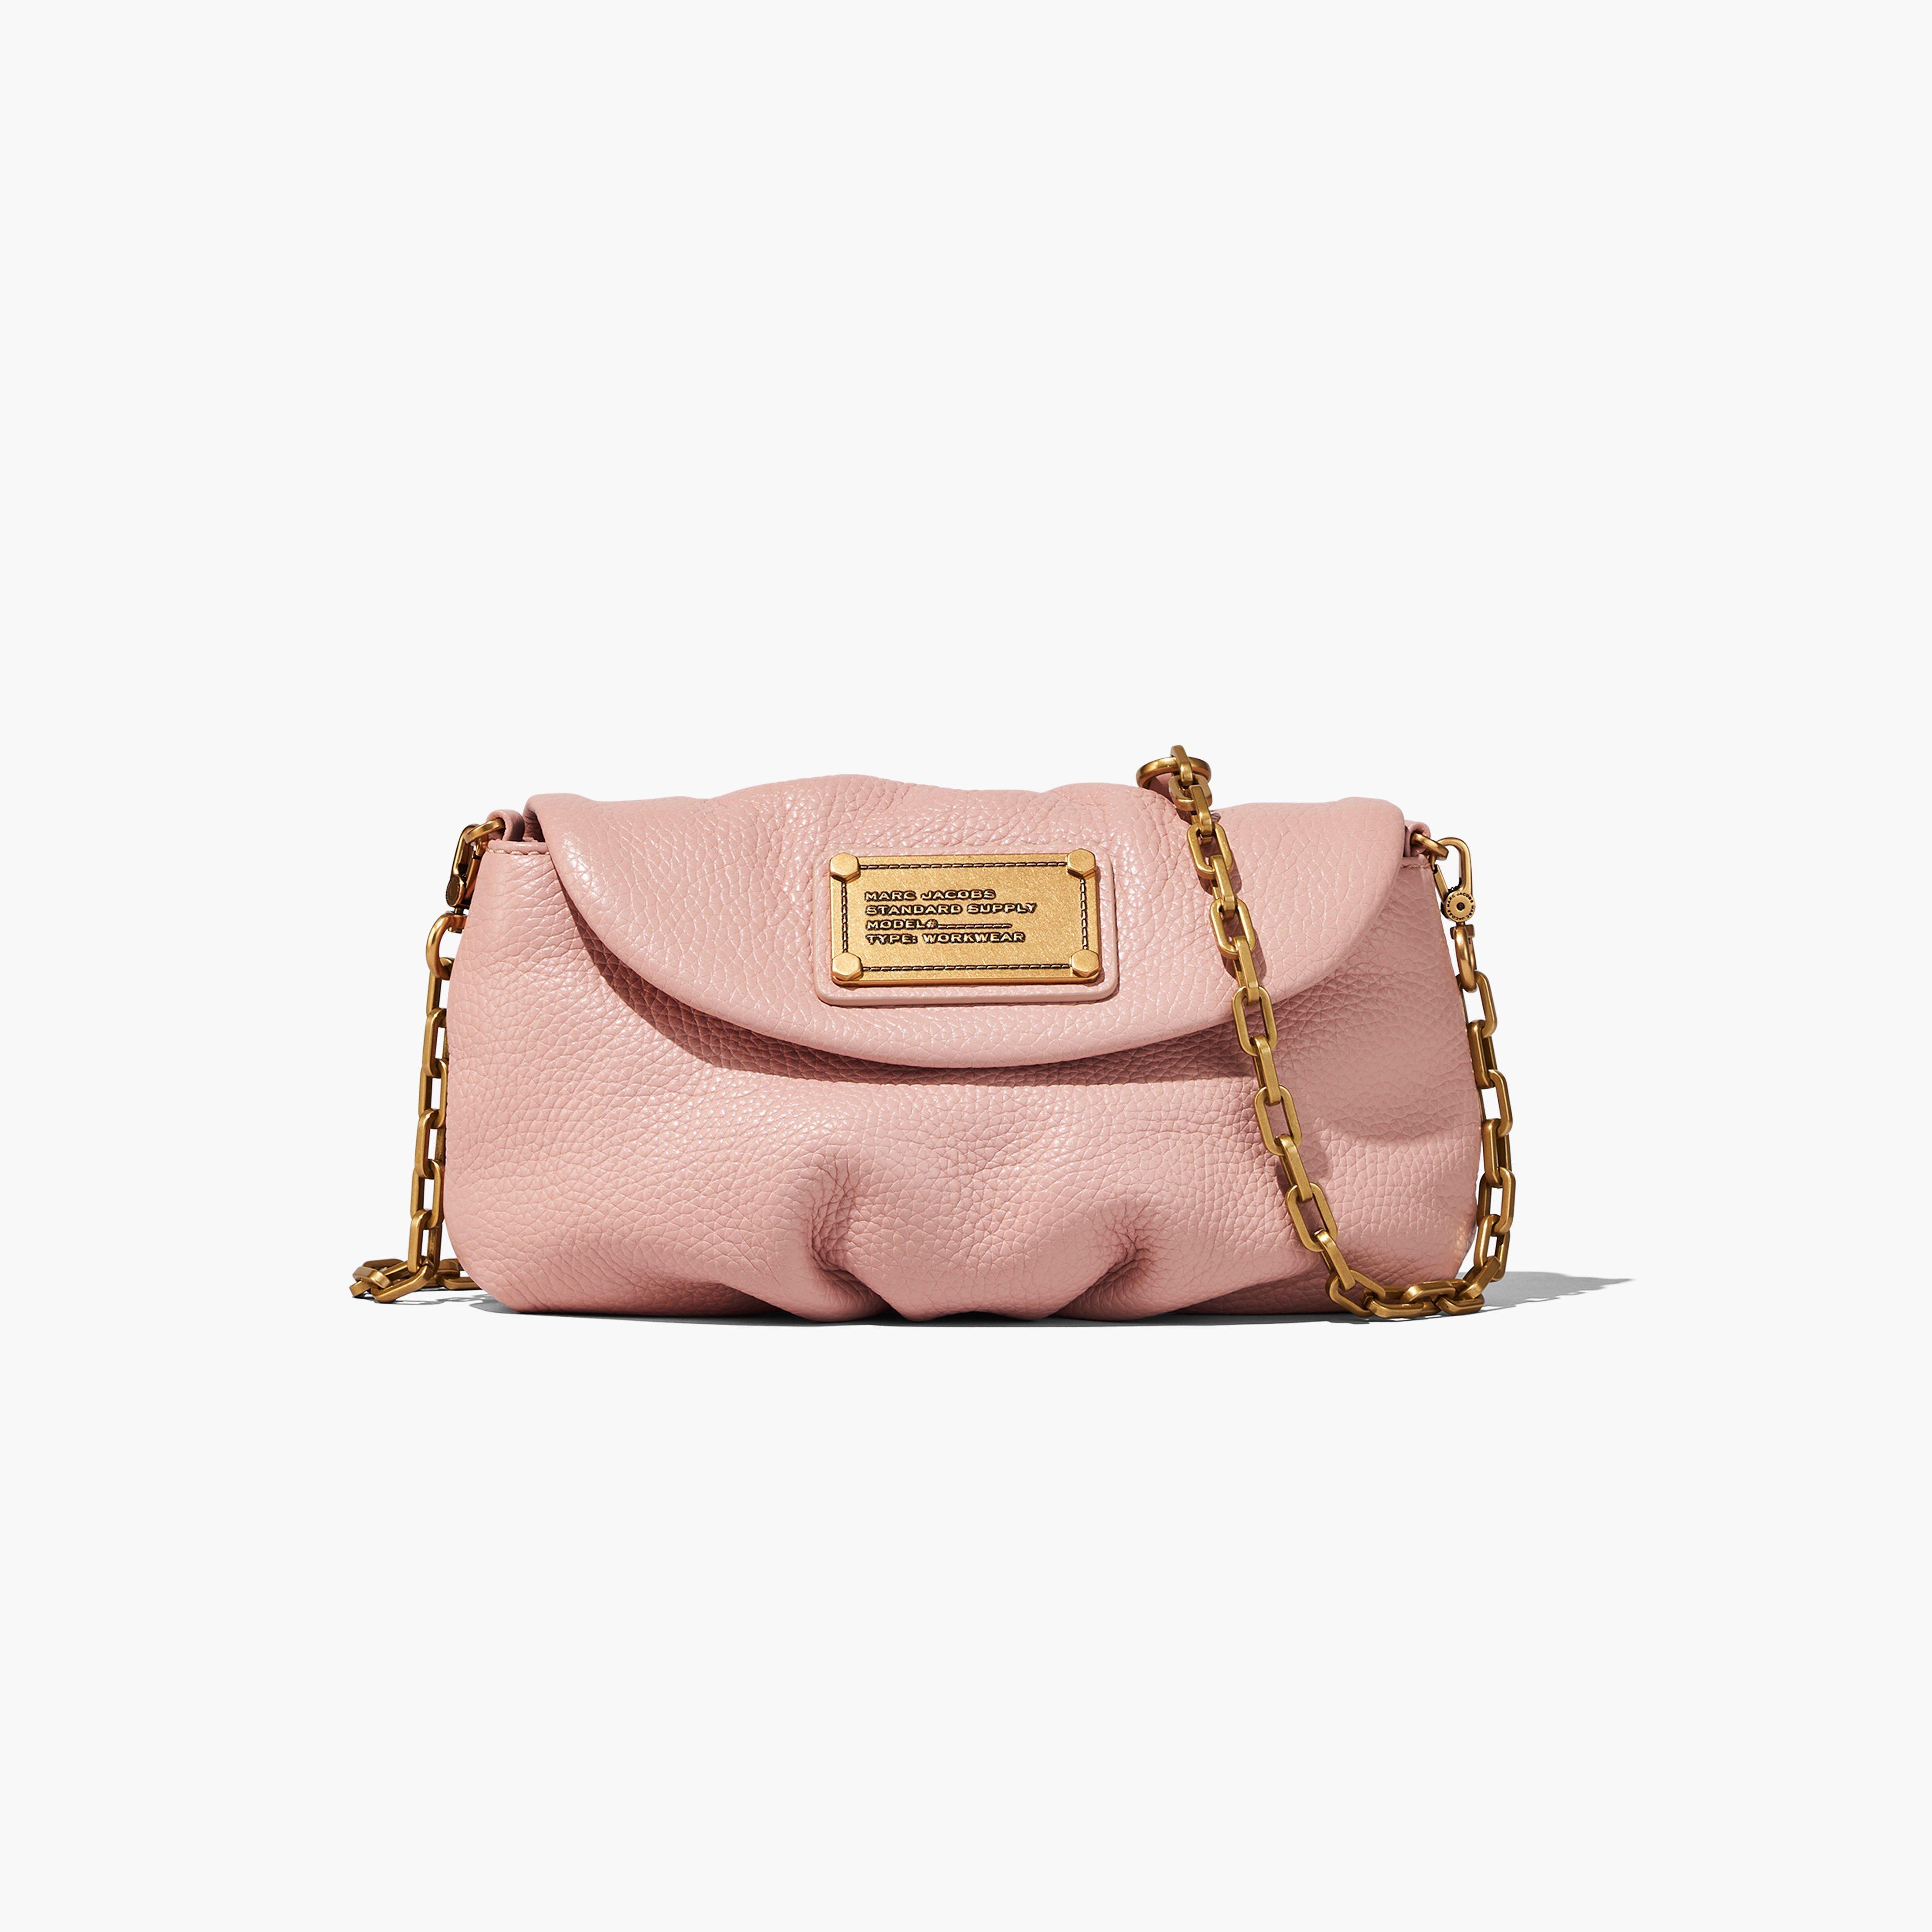 Marc Jacobs Re-edition Karlie Bag in Pink